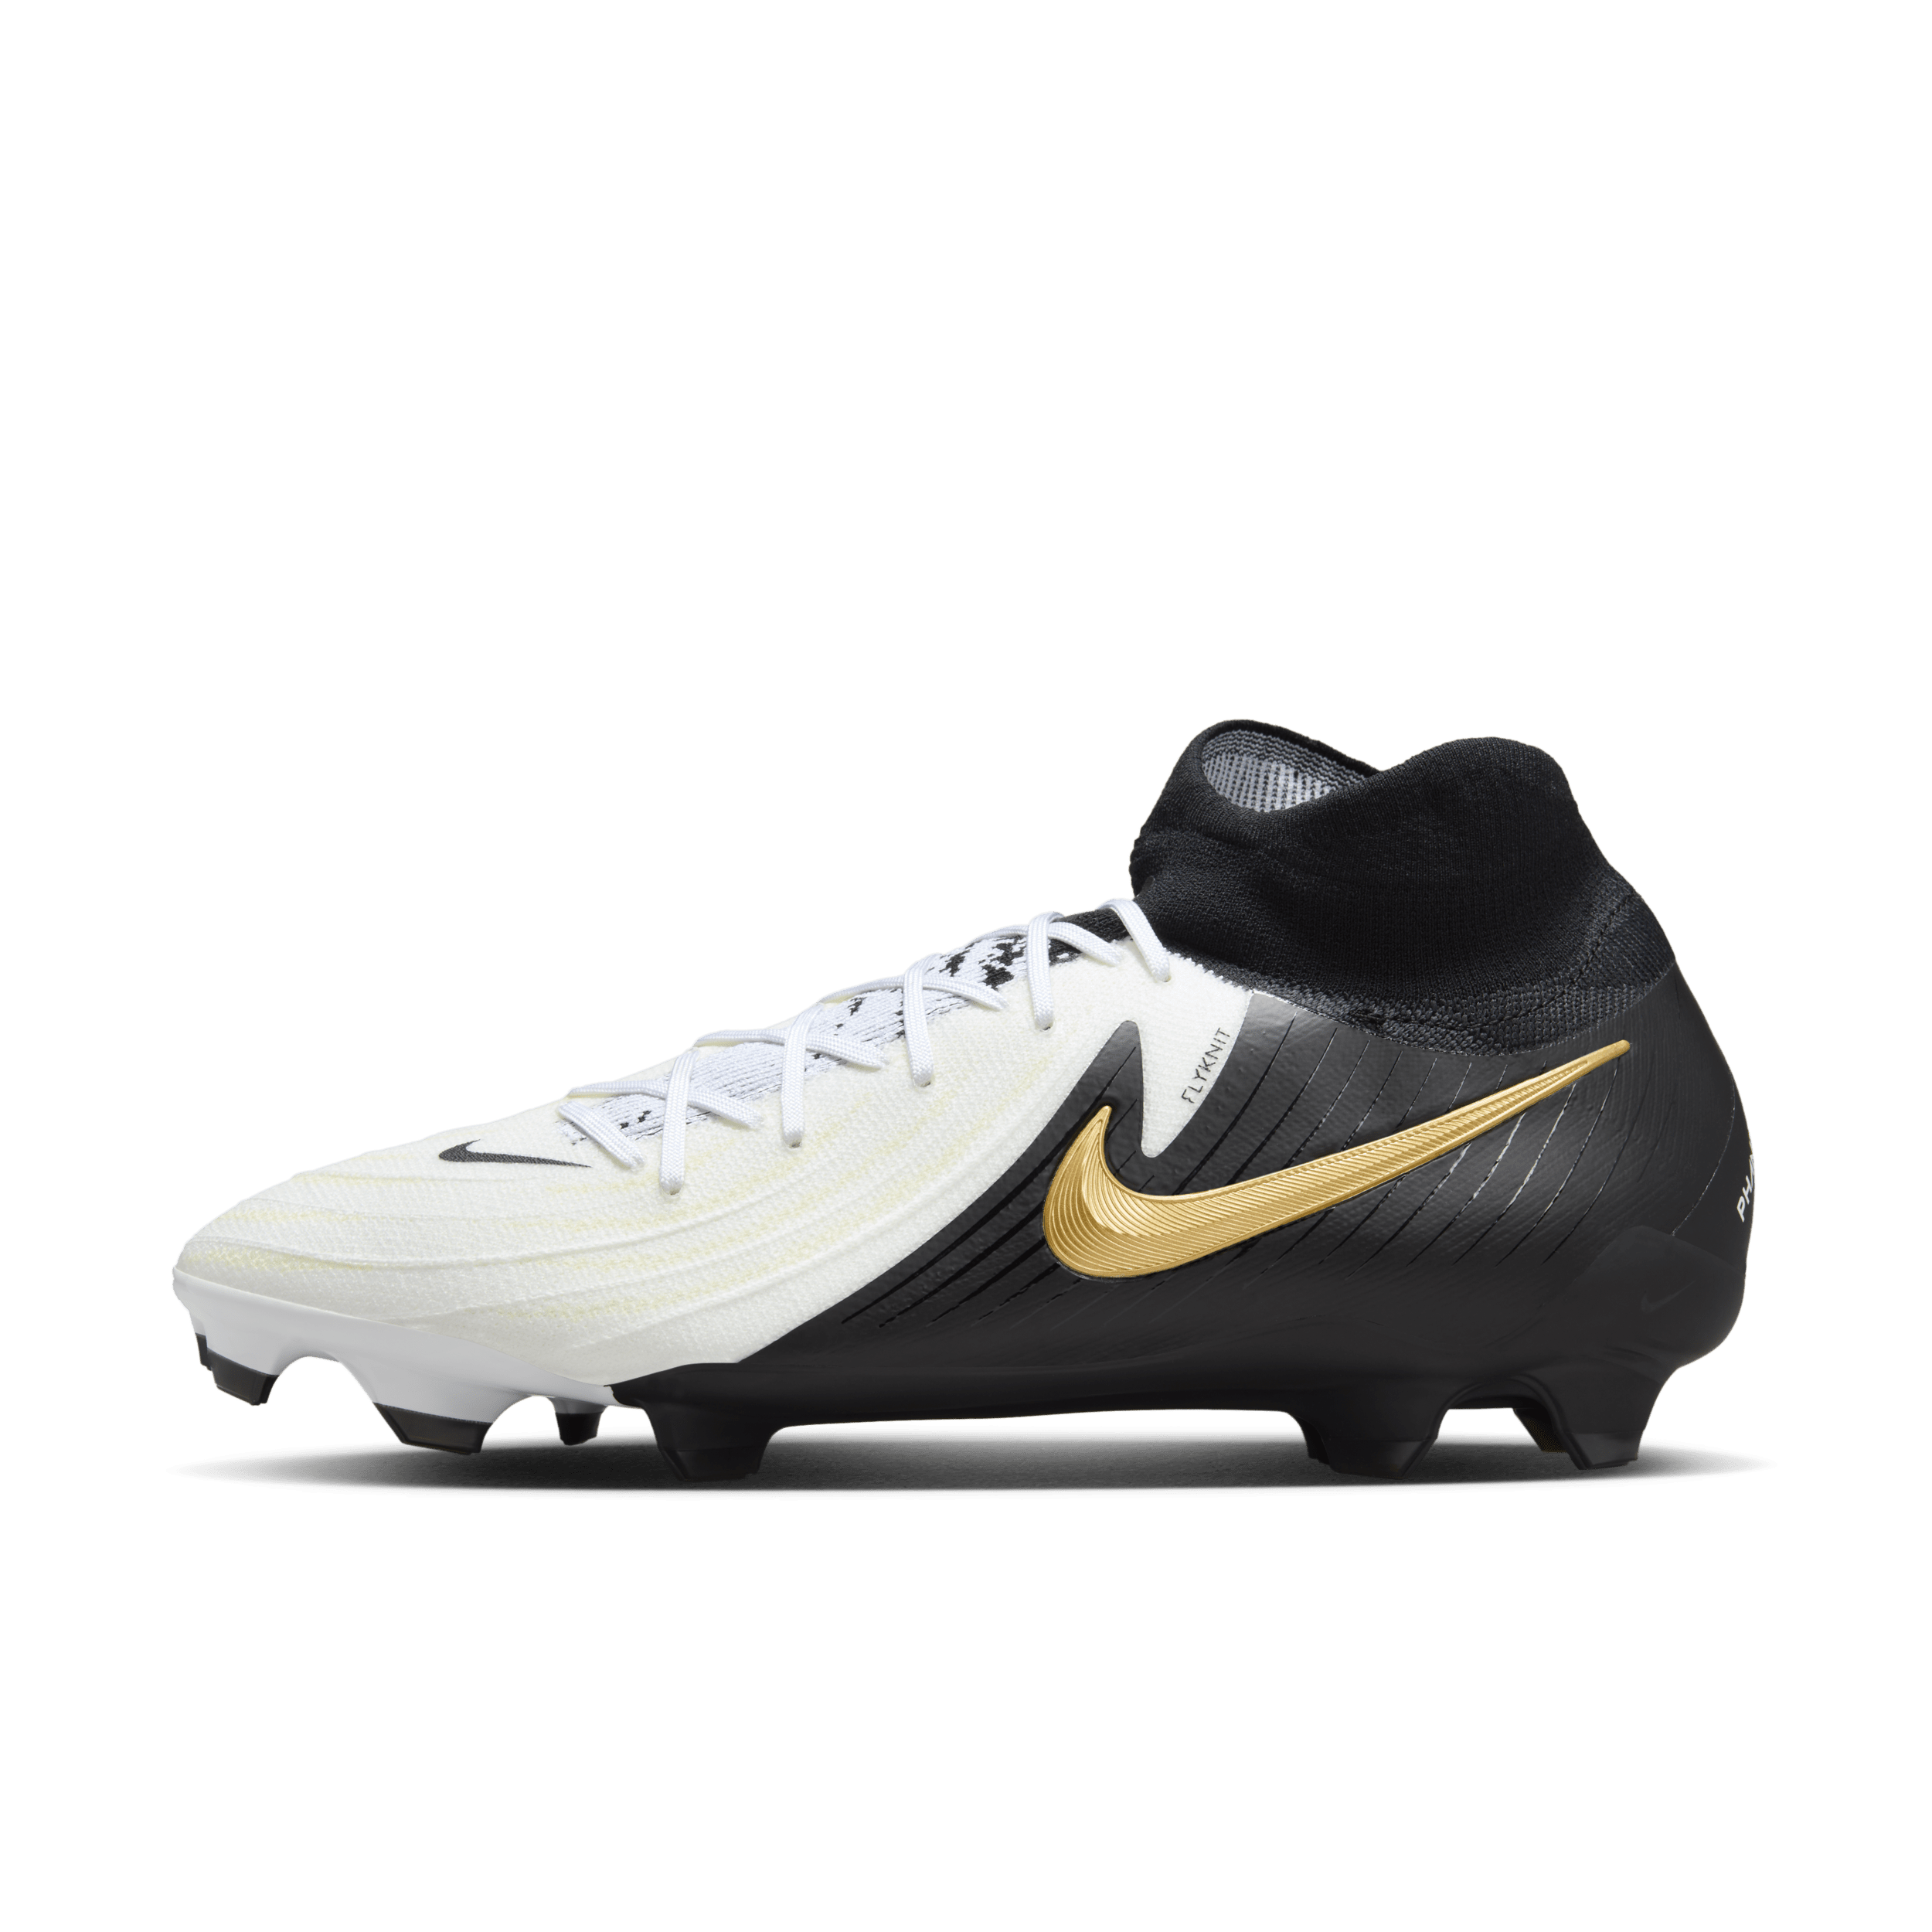 Nike Phantom Luna 2 Pro high-top voetbalschoenen (stevige ondergrond) - Wit